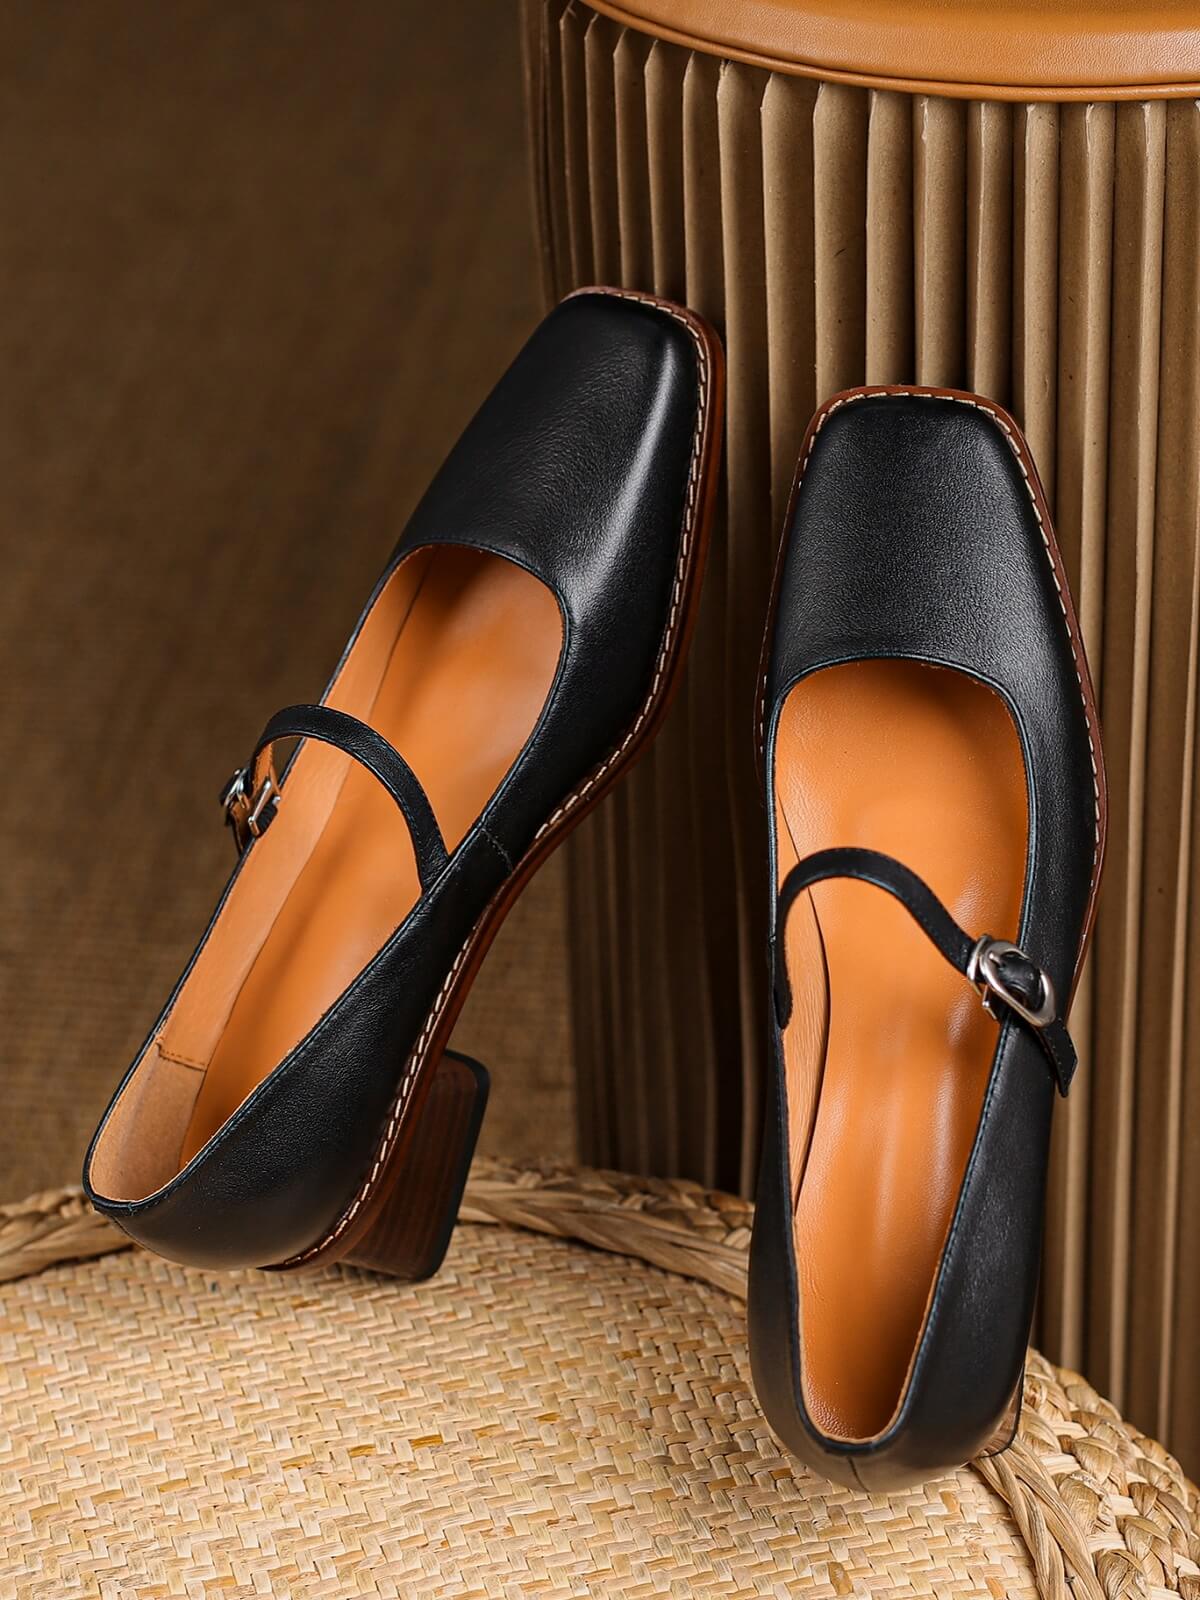 ASOS DESIGN Penny platform mary jane heeled shoes in black | ASOS